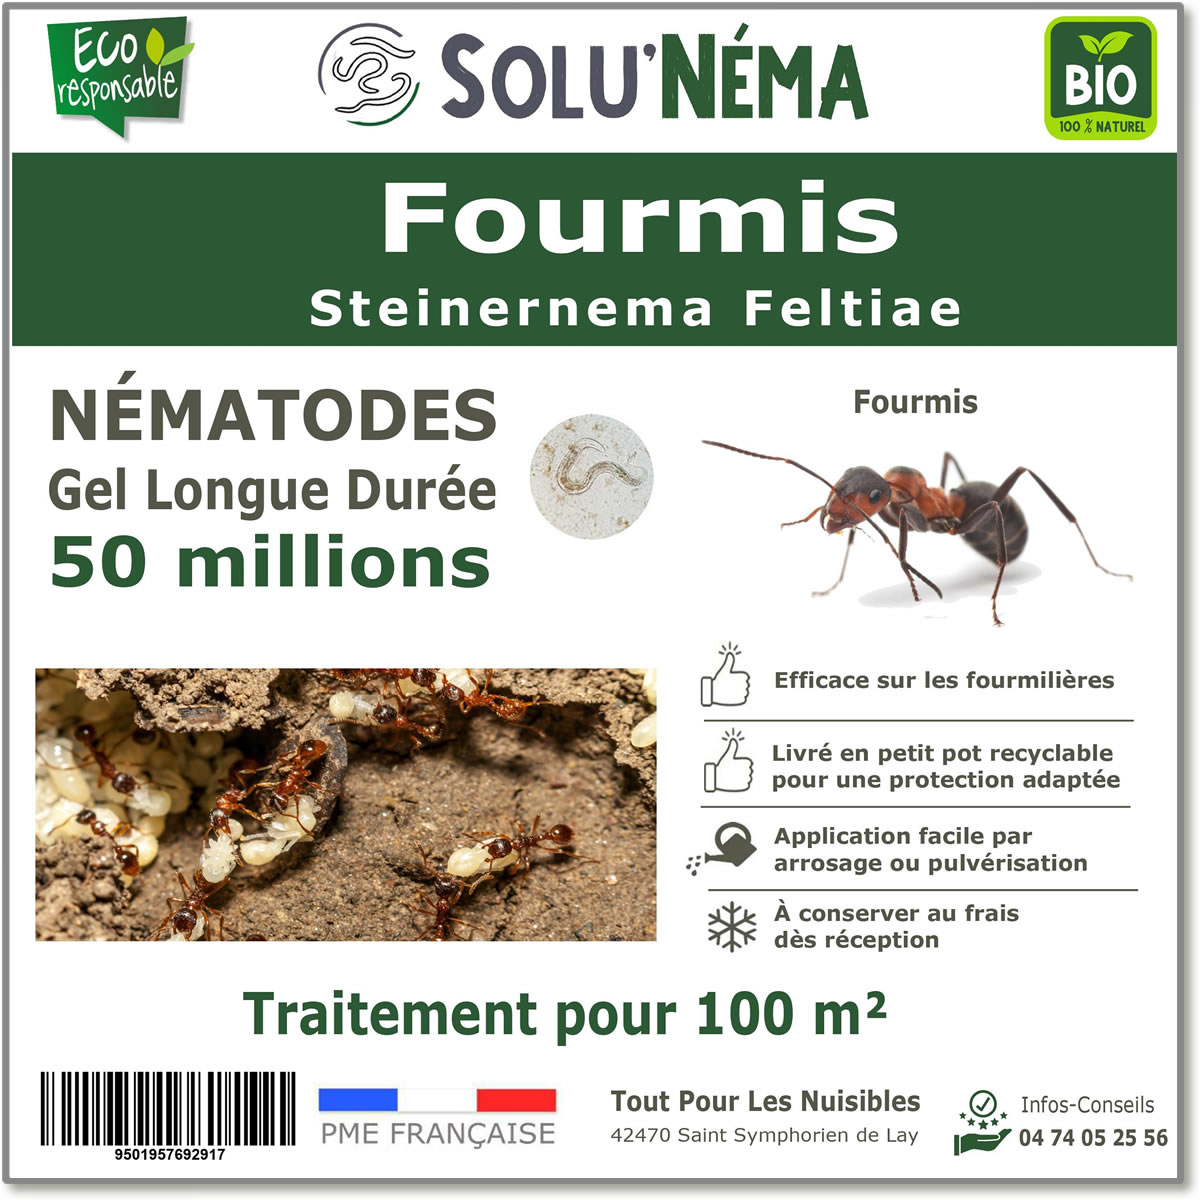 Nematodes ant treatment 50 million